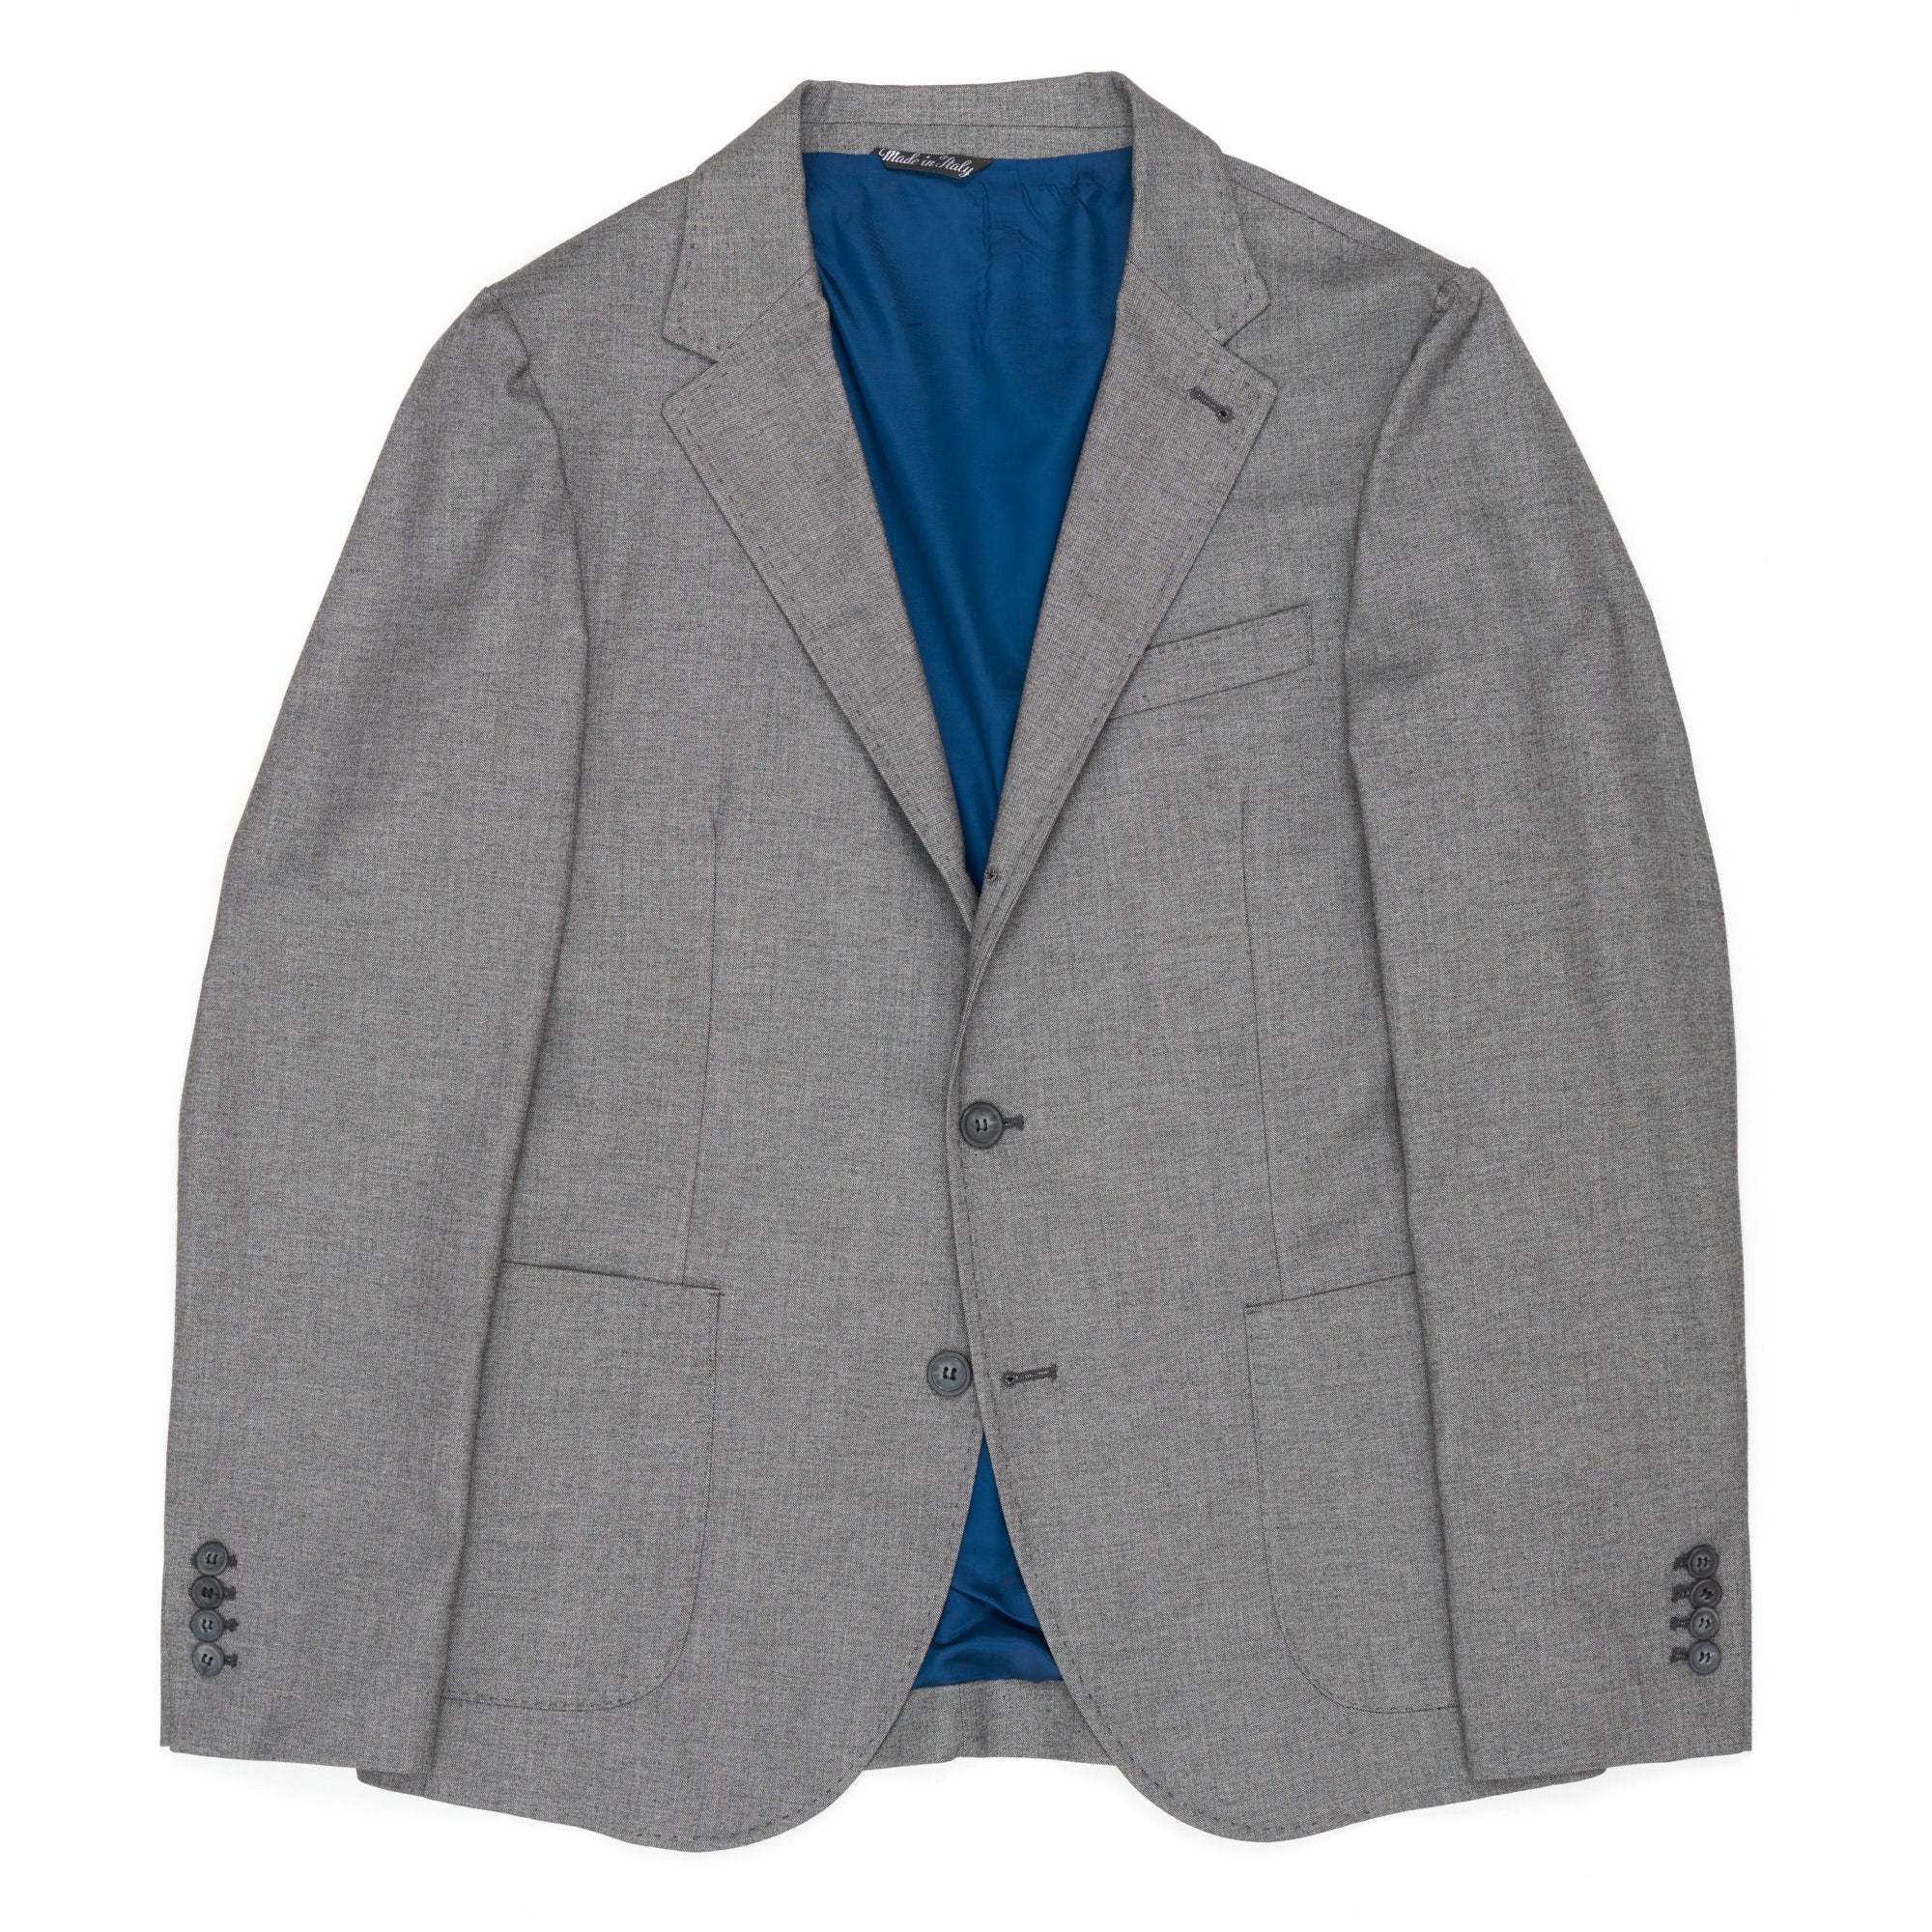 VINCENZO PALUMBO Napoli "Alfred" Gray Wool Sport Coat Jacket NEW Slim Fit VINCENZO PALUMBO